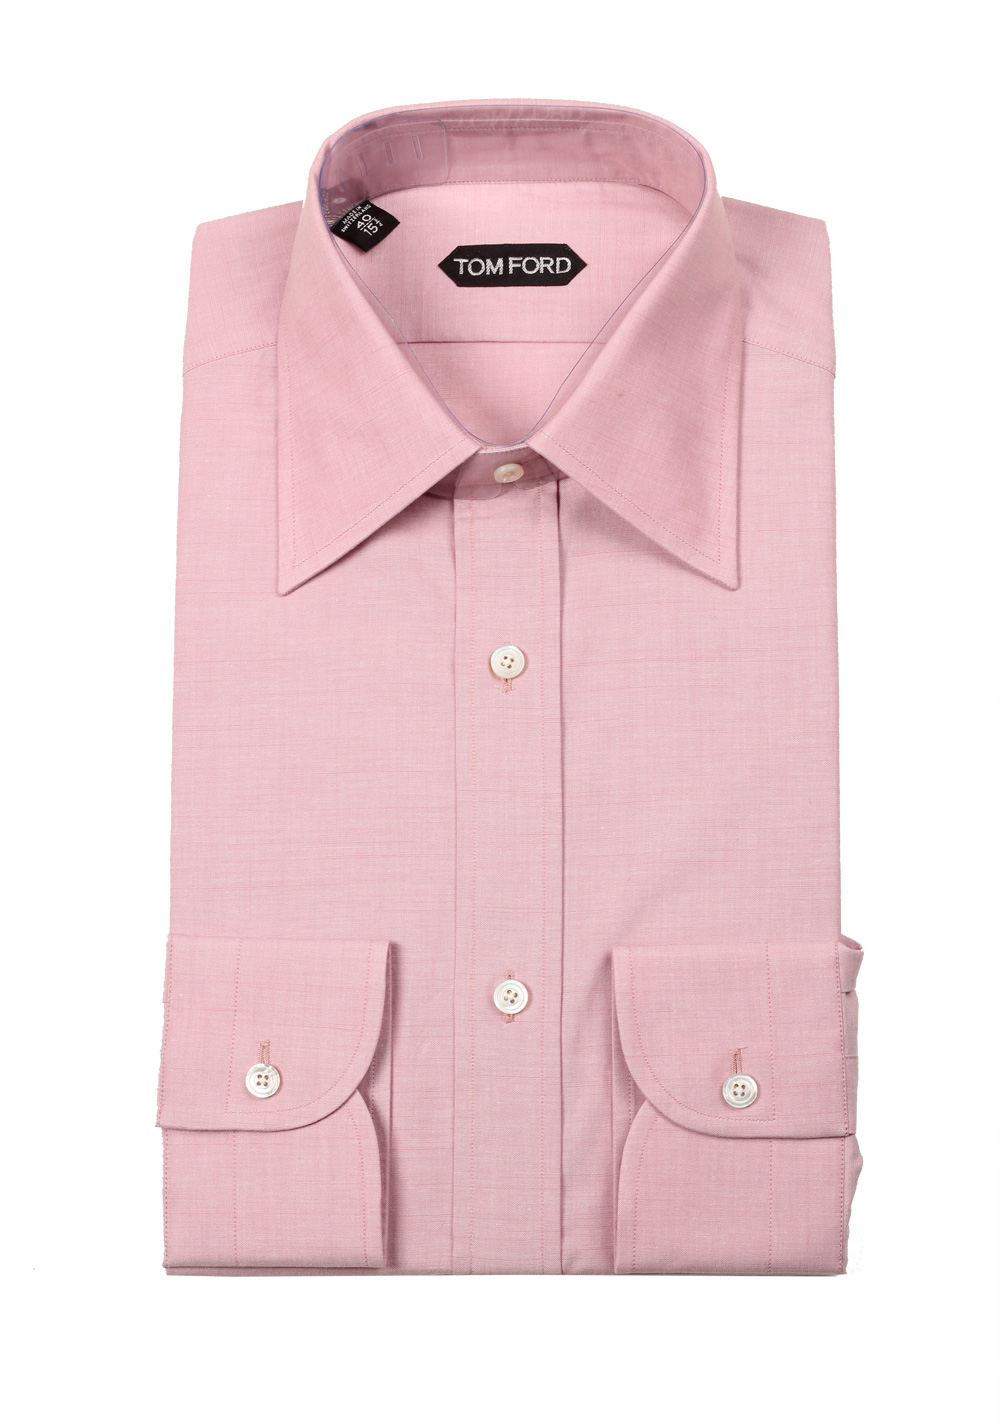 TOM FORD Solid Pink Dress Shirt Size 40 / 15,75 U.S. | Costume Limité